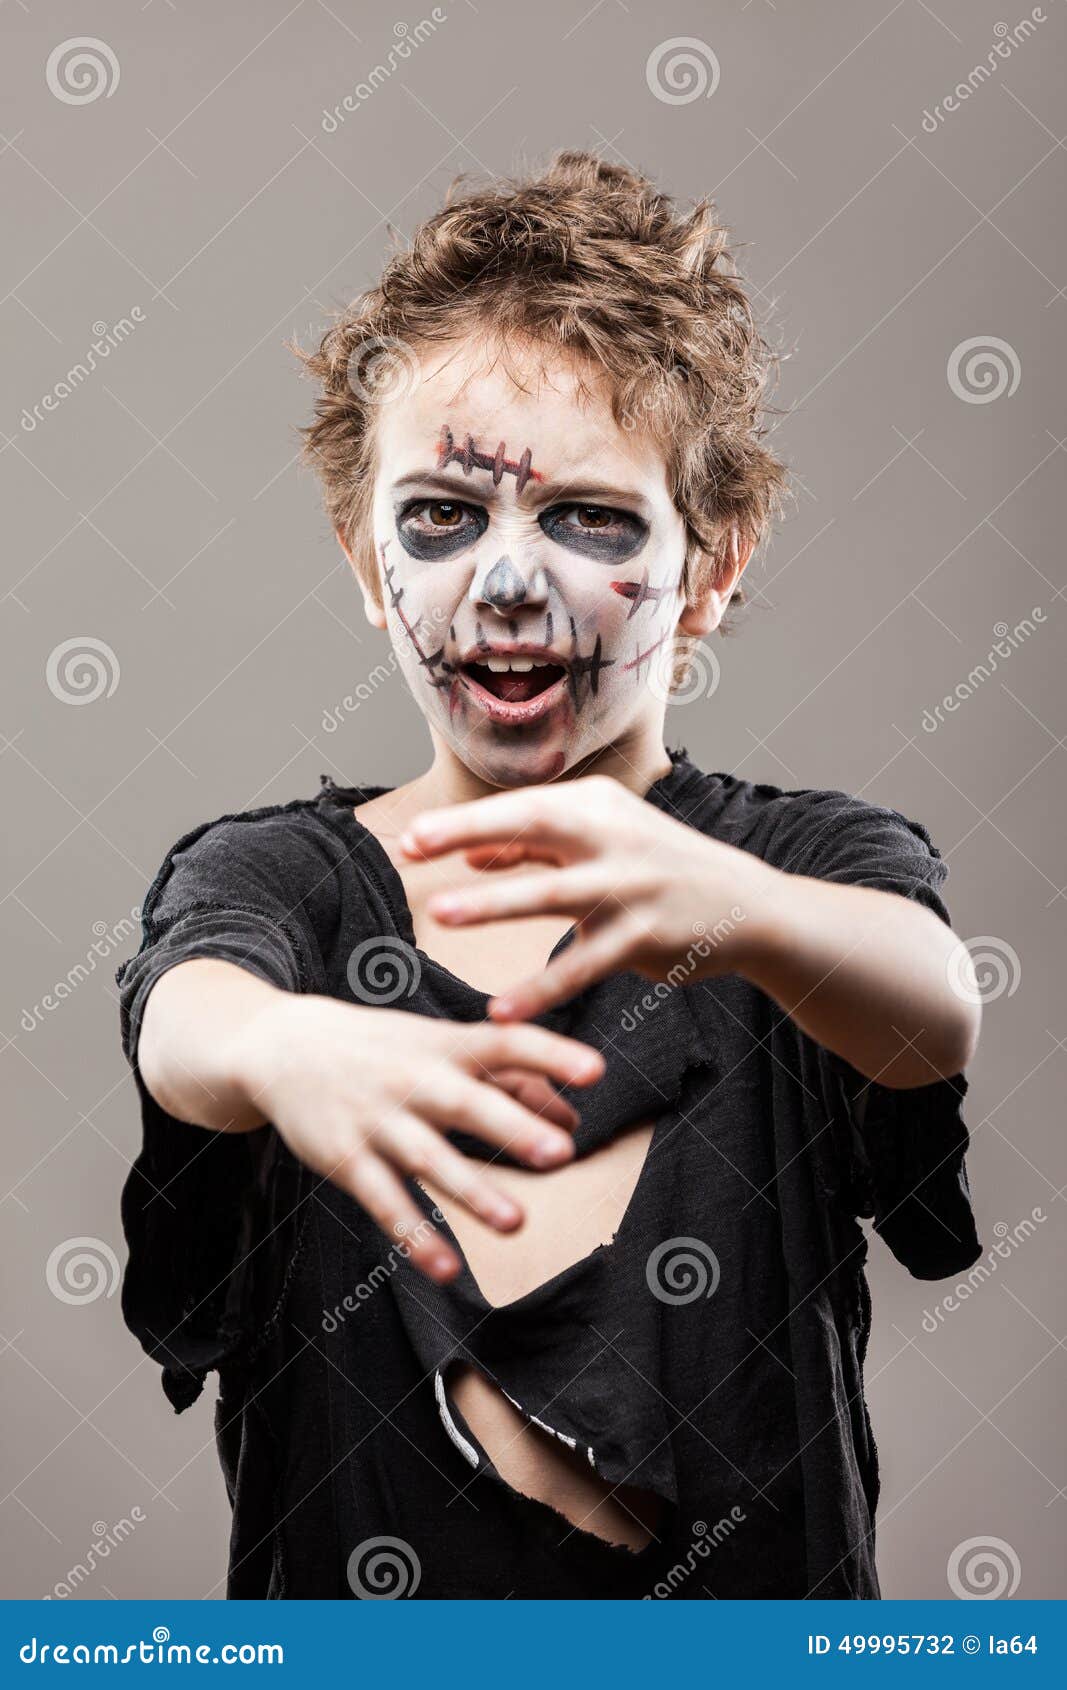 Screaming Walking Dead Zombie Child Boy Stock Photo - Image: 49995732